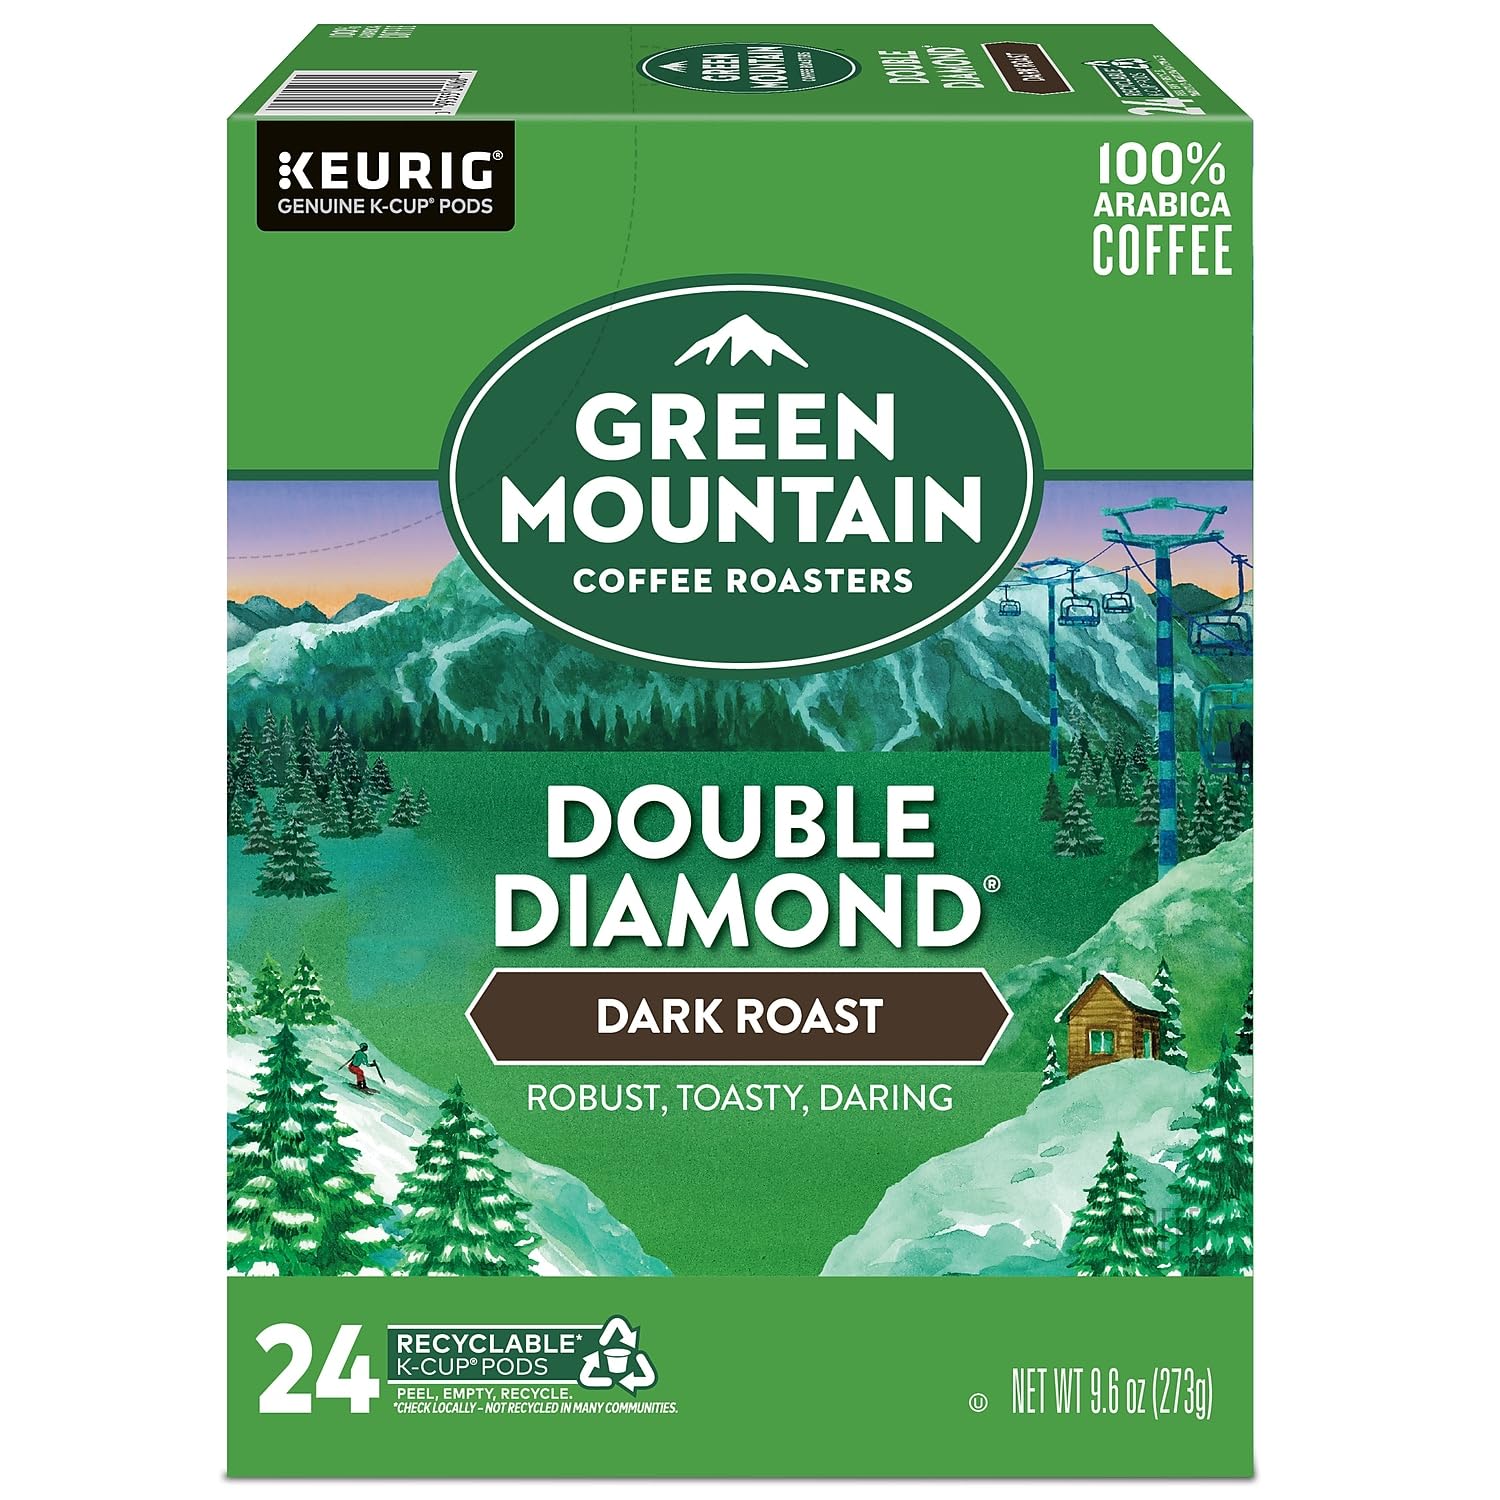 Green Mountain Coffee Roasters Double Diamond, Single-Serve Keurig K-Cup Pods, Dark Roast Coffee Pods, 96 Count